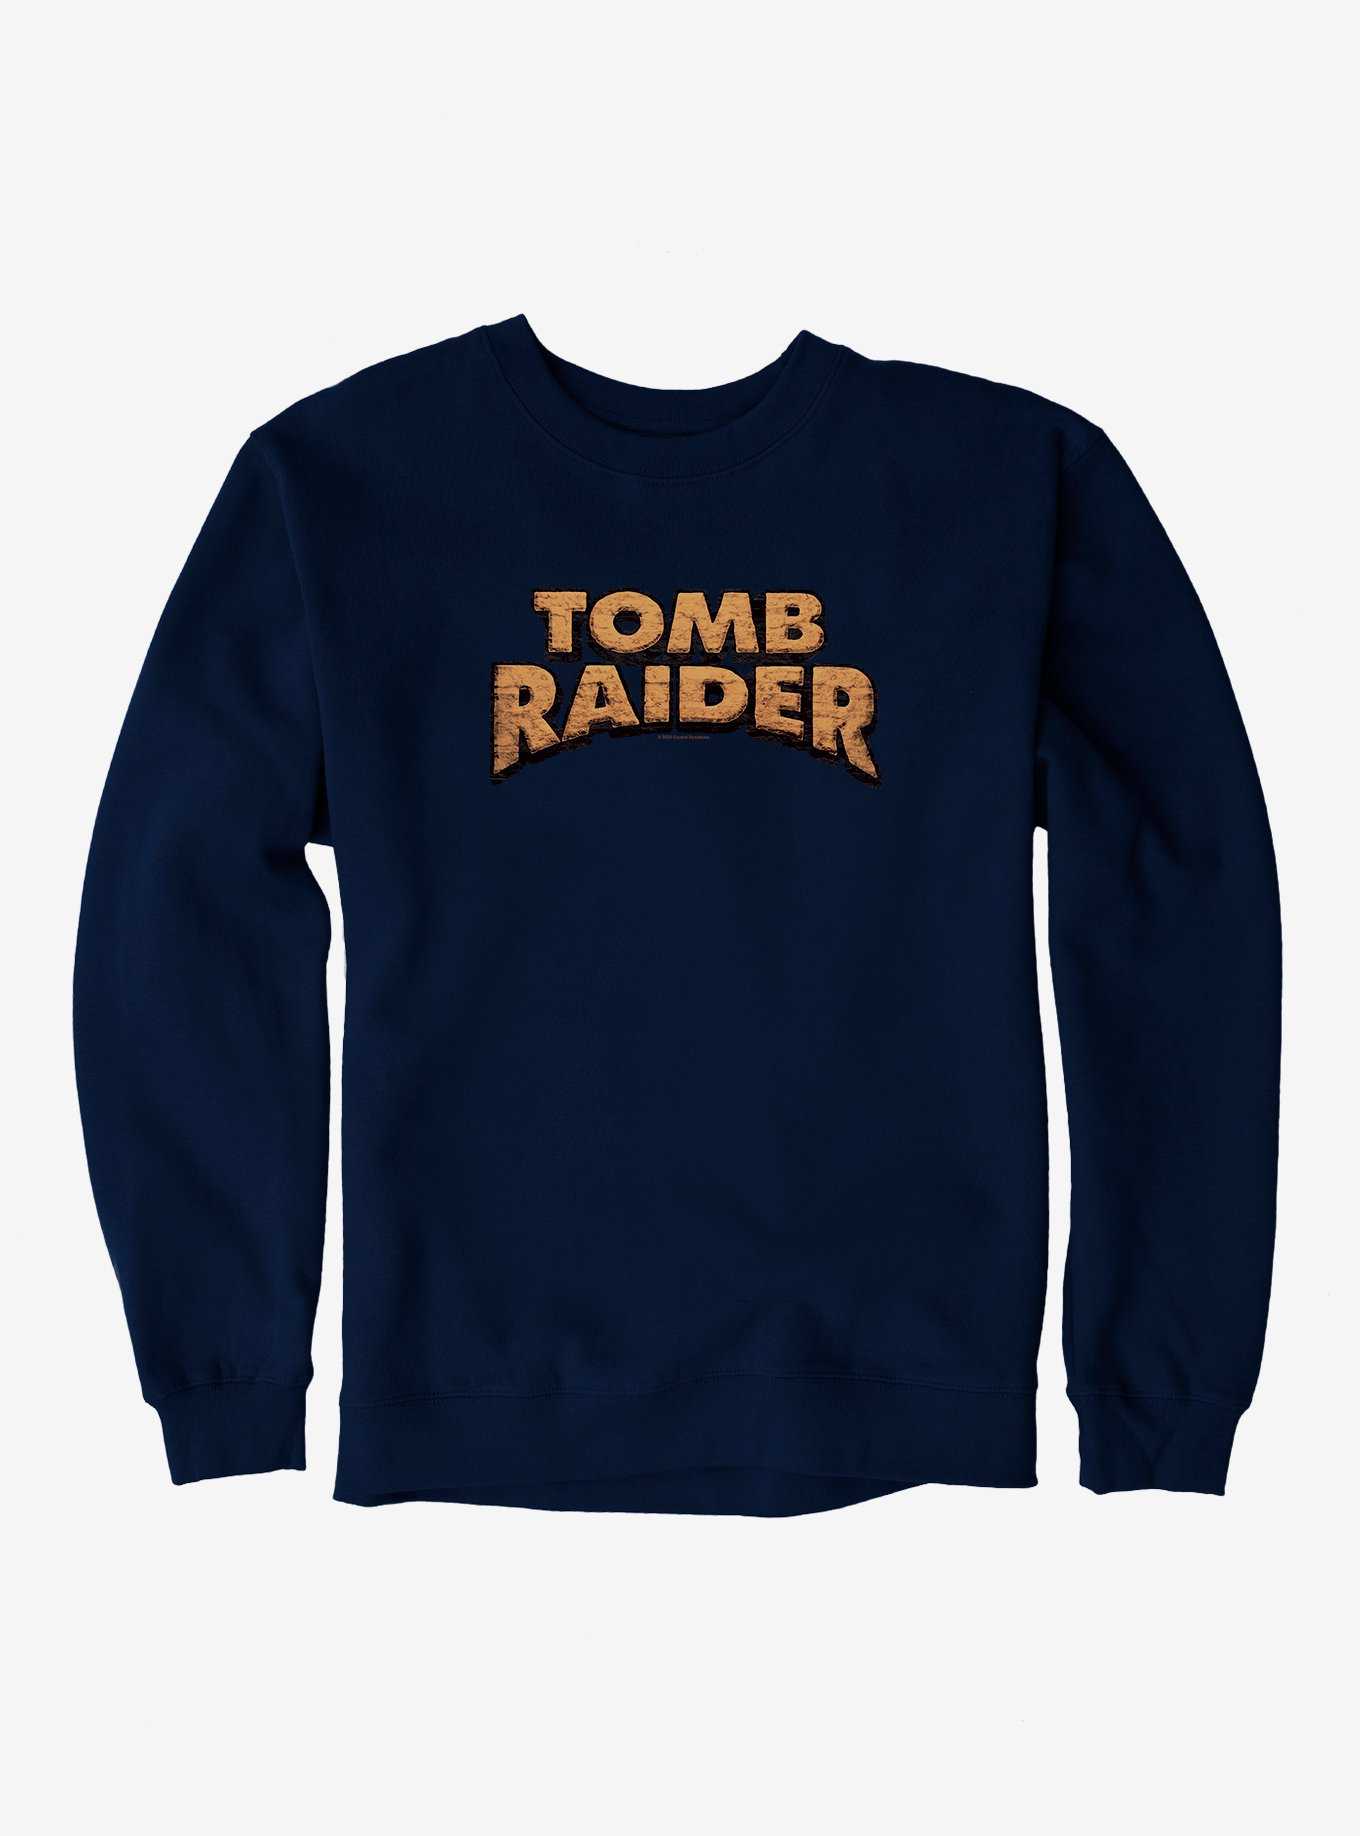 Tomb Raider 1996 Game Cover Sweatshirt, , hi-res